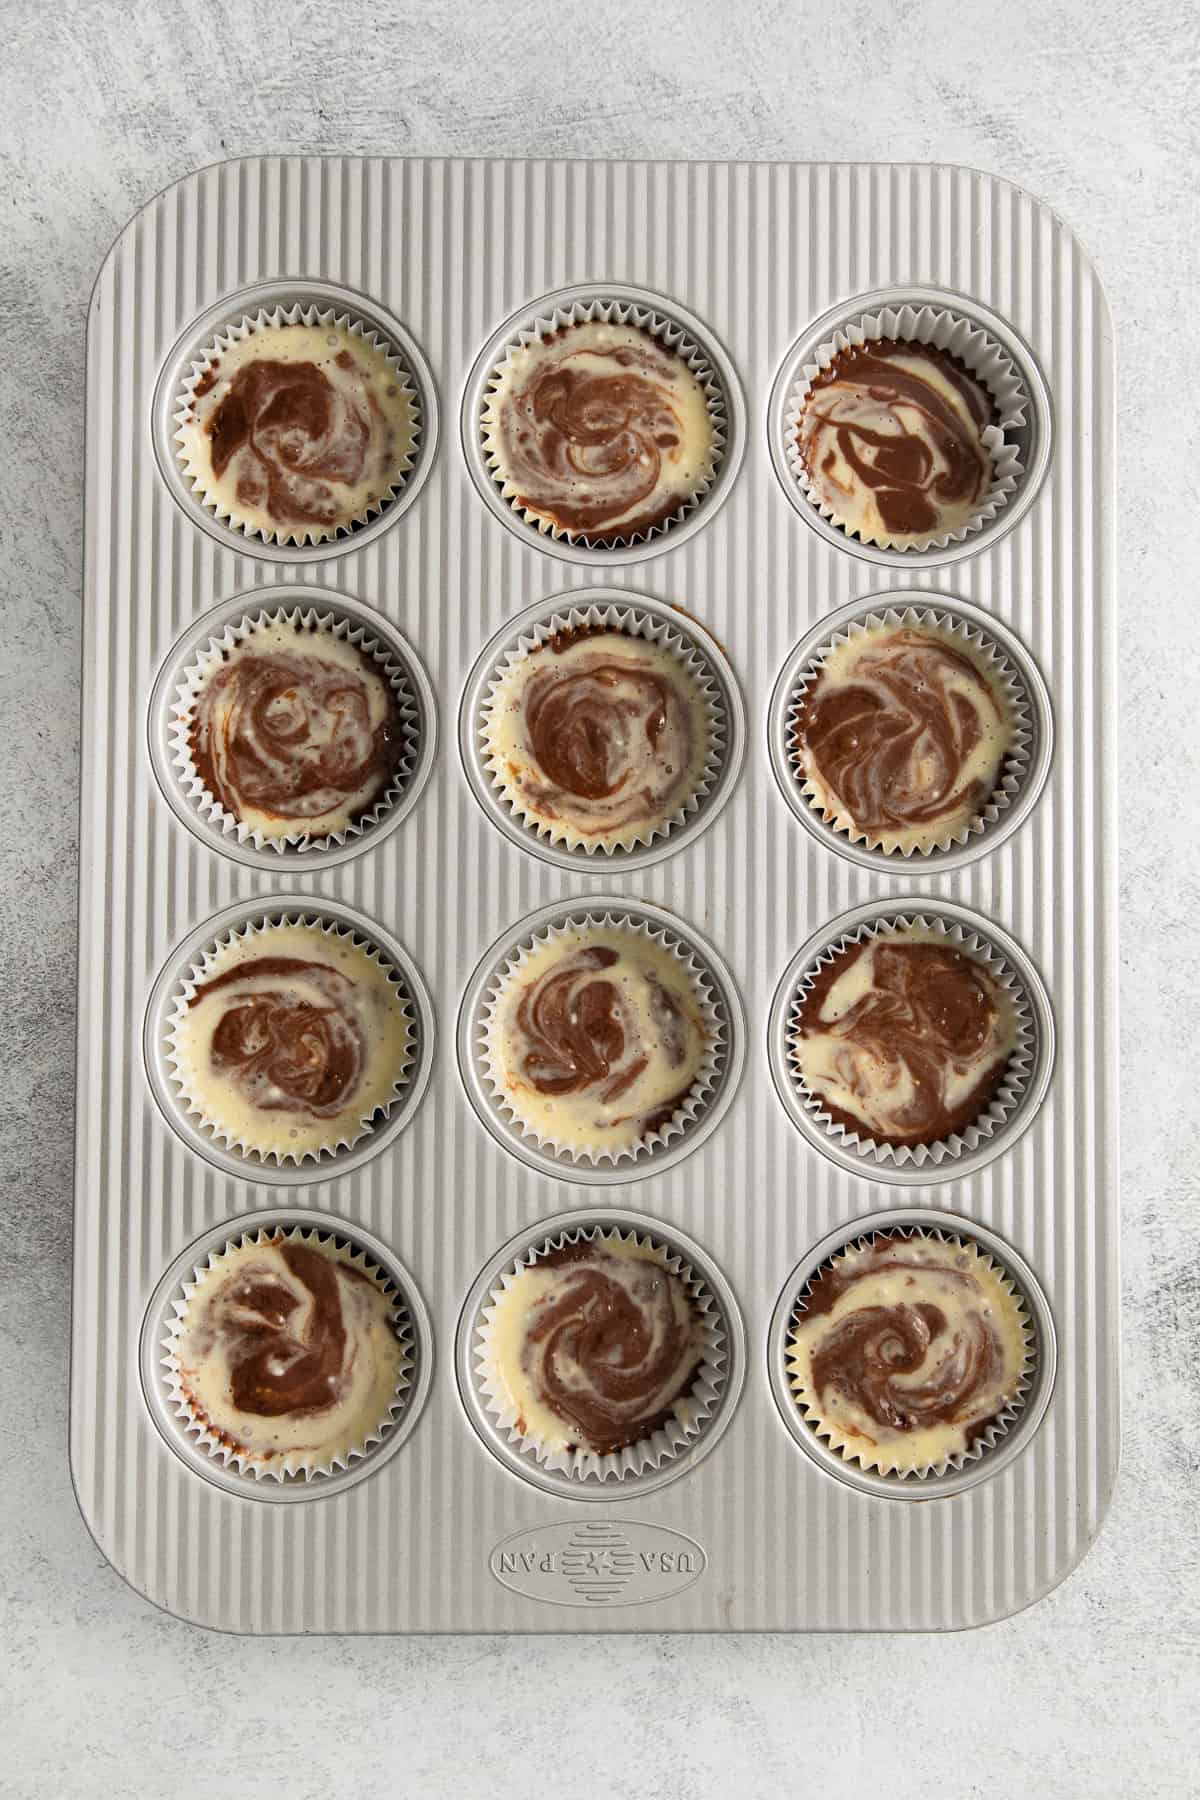 Cream cheese chocolate cupcakes in a muffin tin.